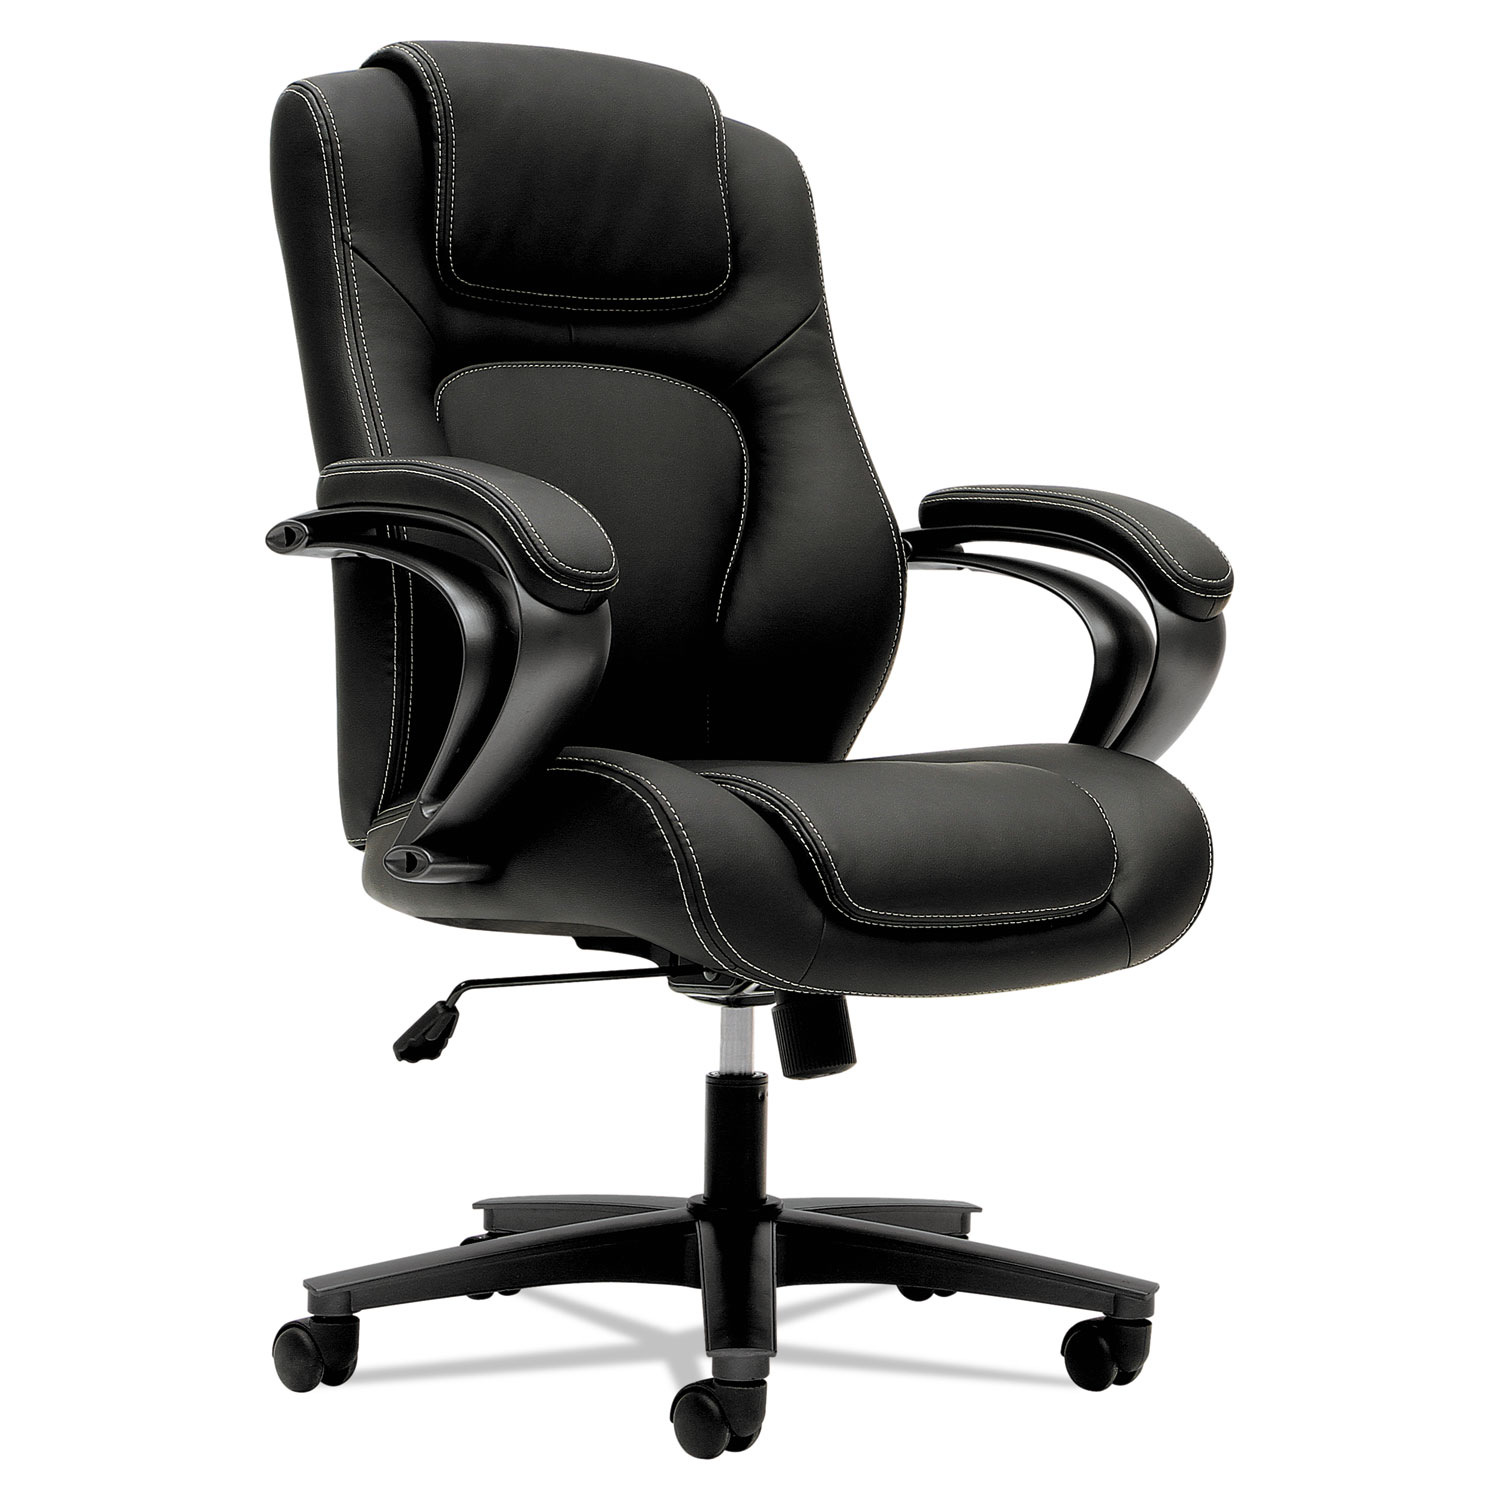  HON HVL402.EN11 HVL402 Series Executive High-Back Chair, Supports up to 250 lbs., Black Seat/Black Back, Black Base (BSXVL402EN11) 